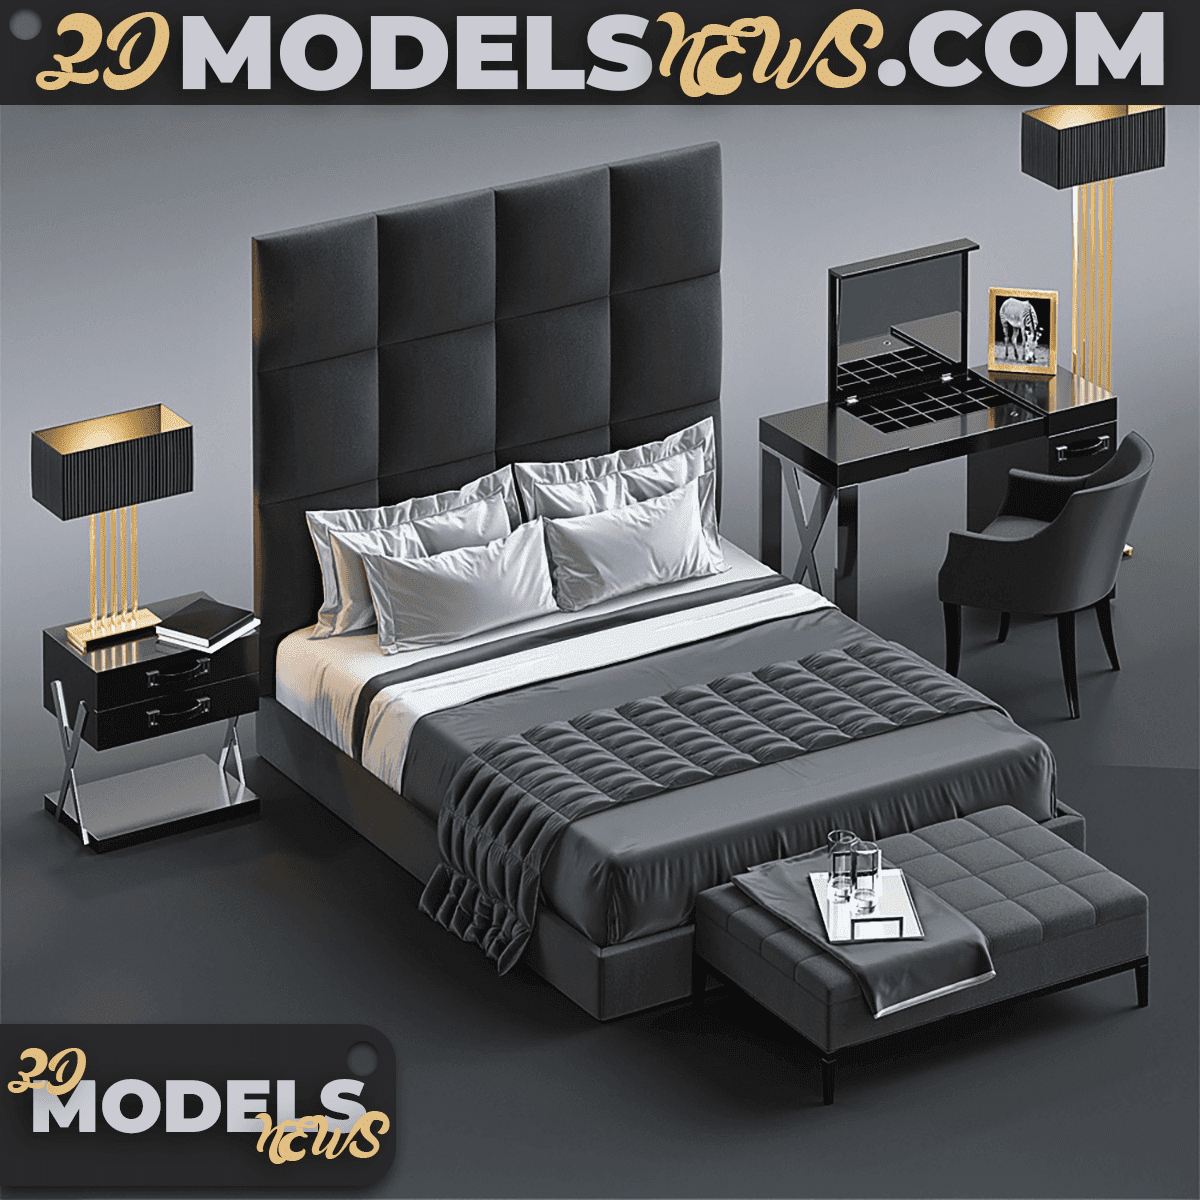 Bed model from Cafo in black 3